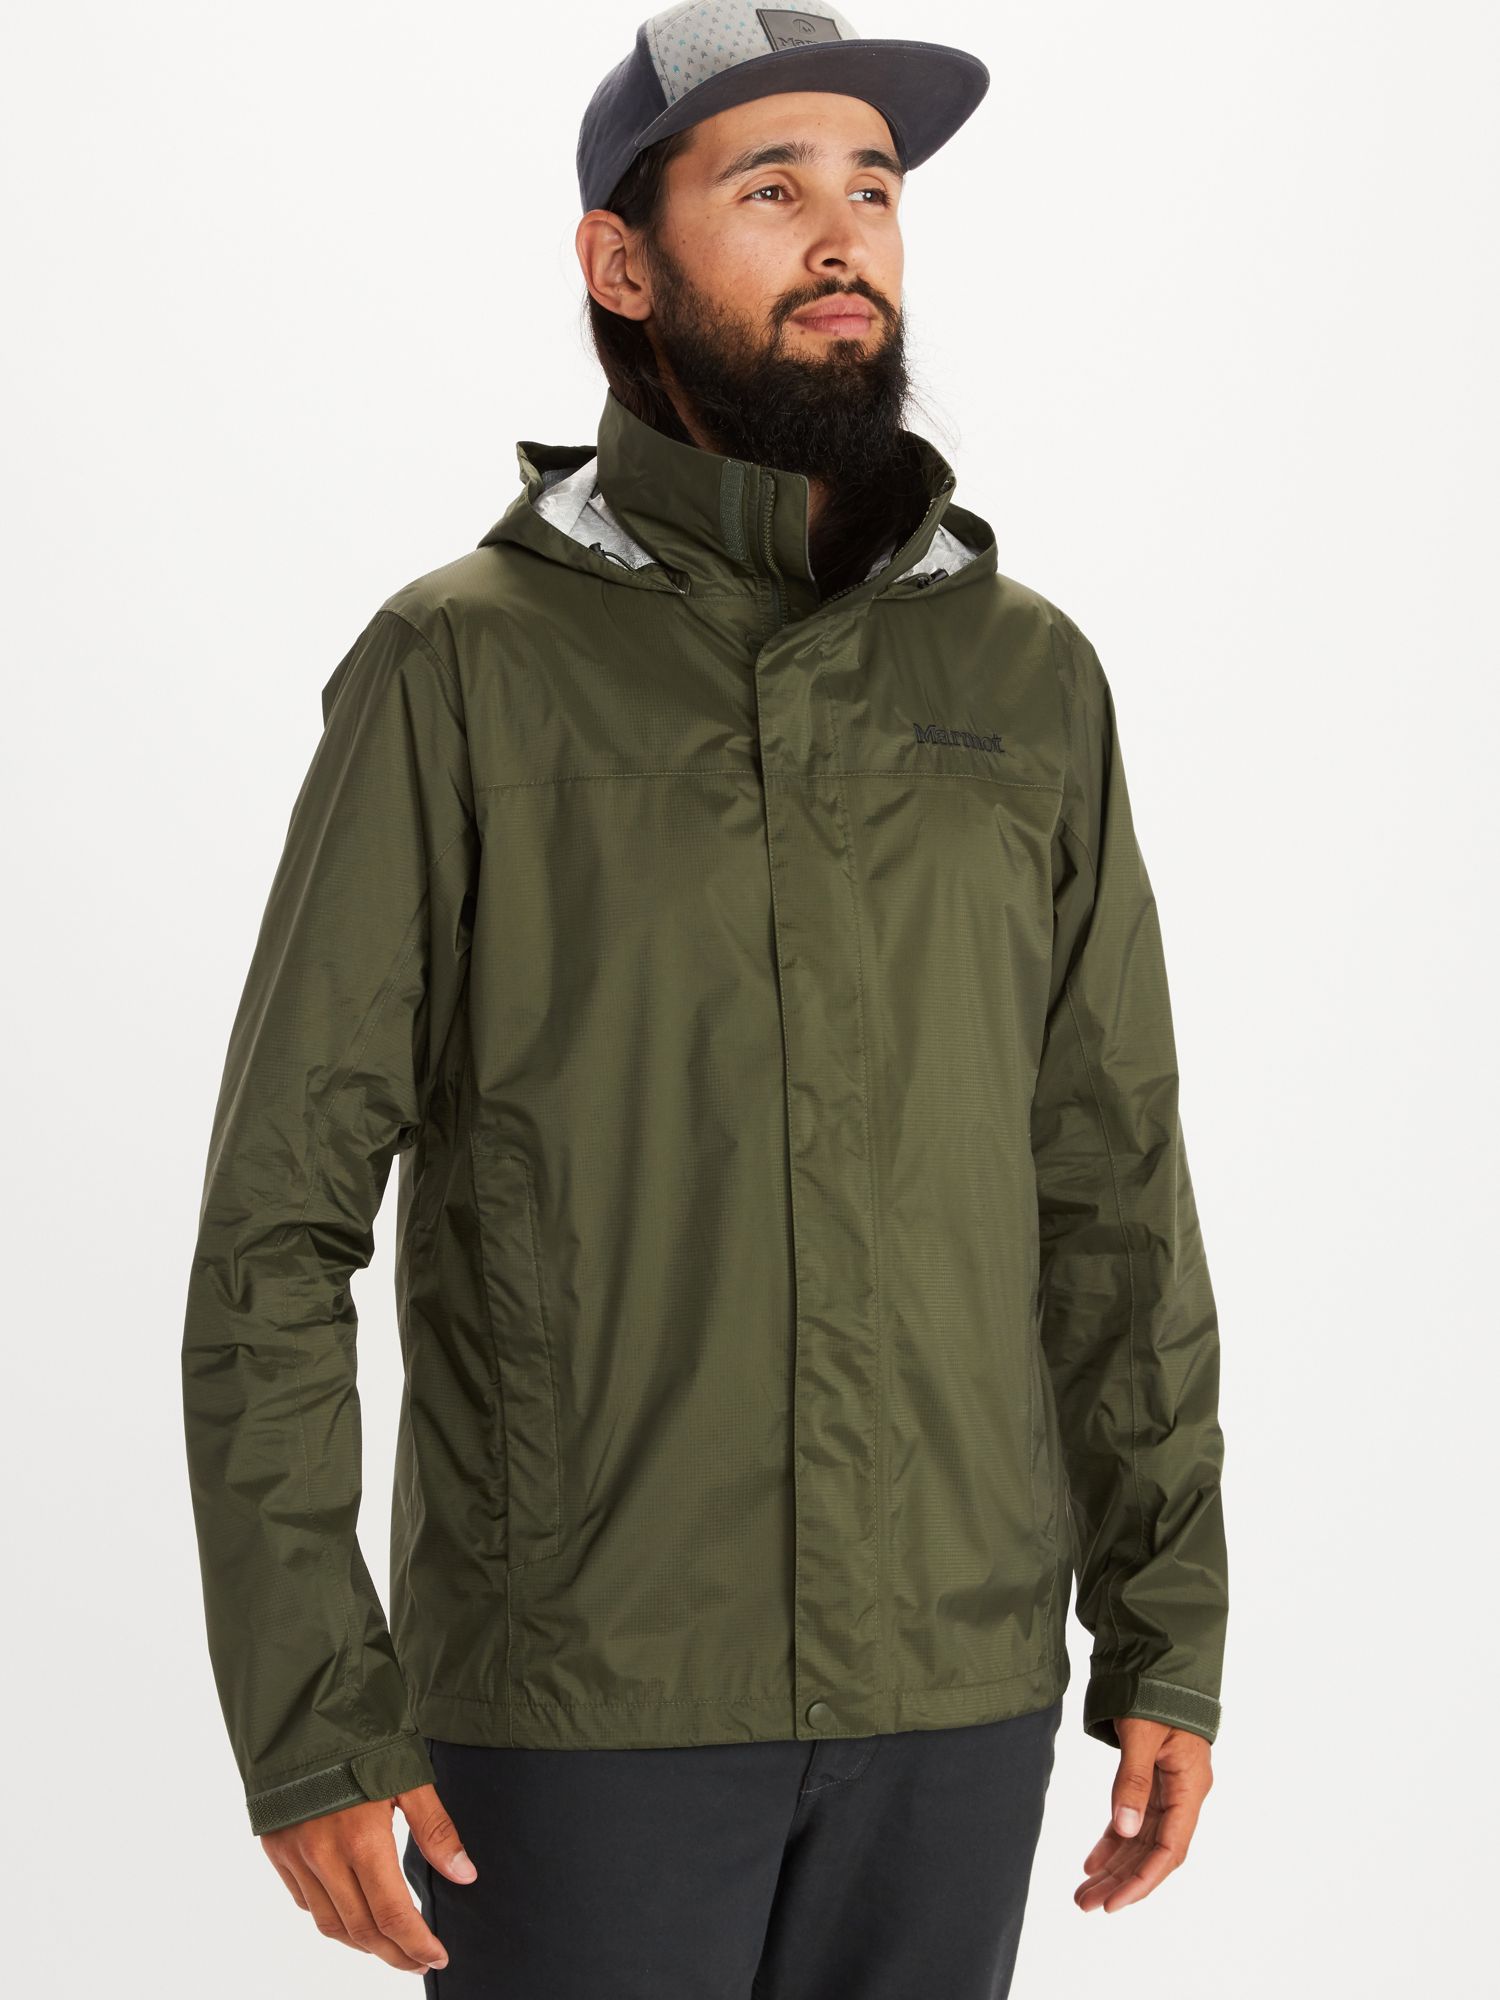 Men's Marmot Precip Rain Jacket Ultra light,waterproof jacket